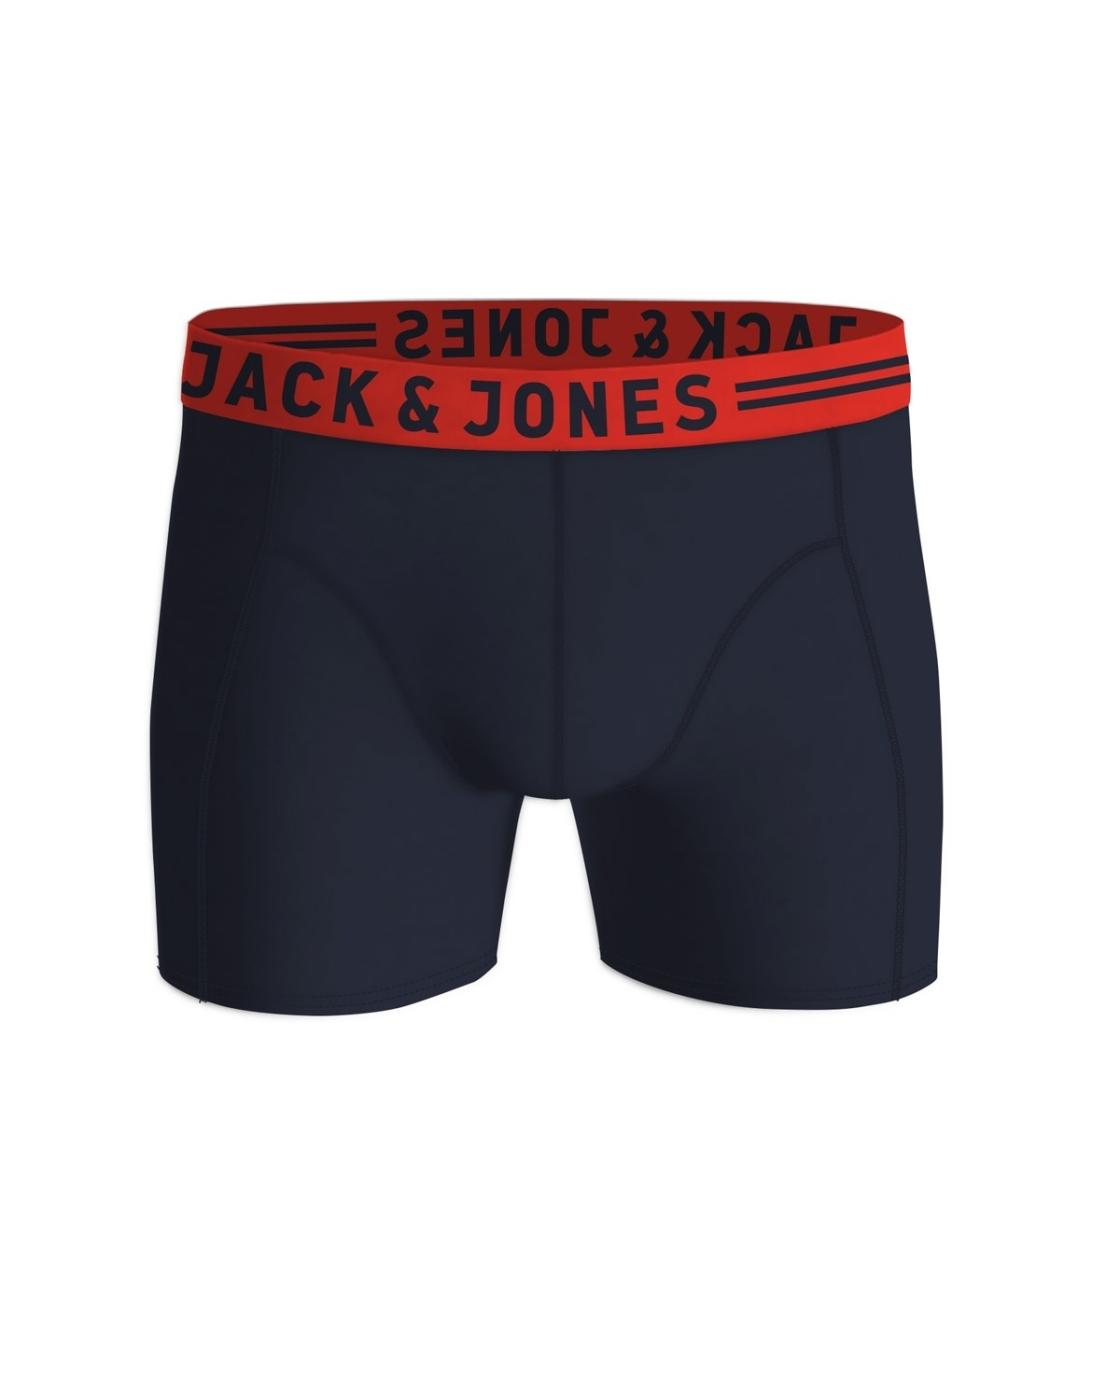 Intimo Jack&Jones Lichfield pack3 para hombre -p